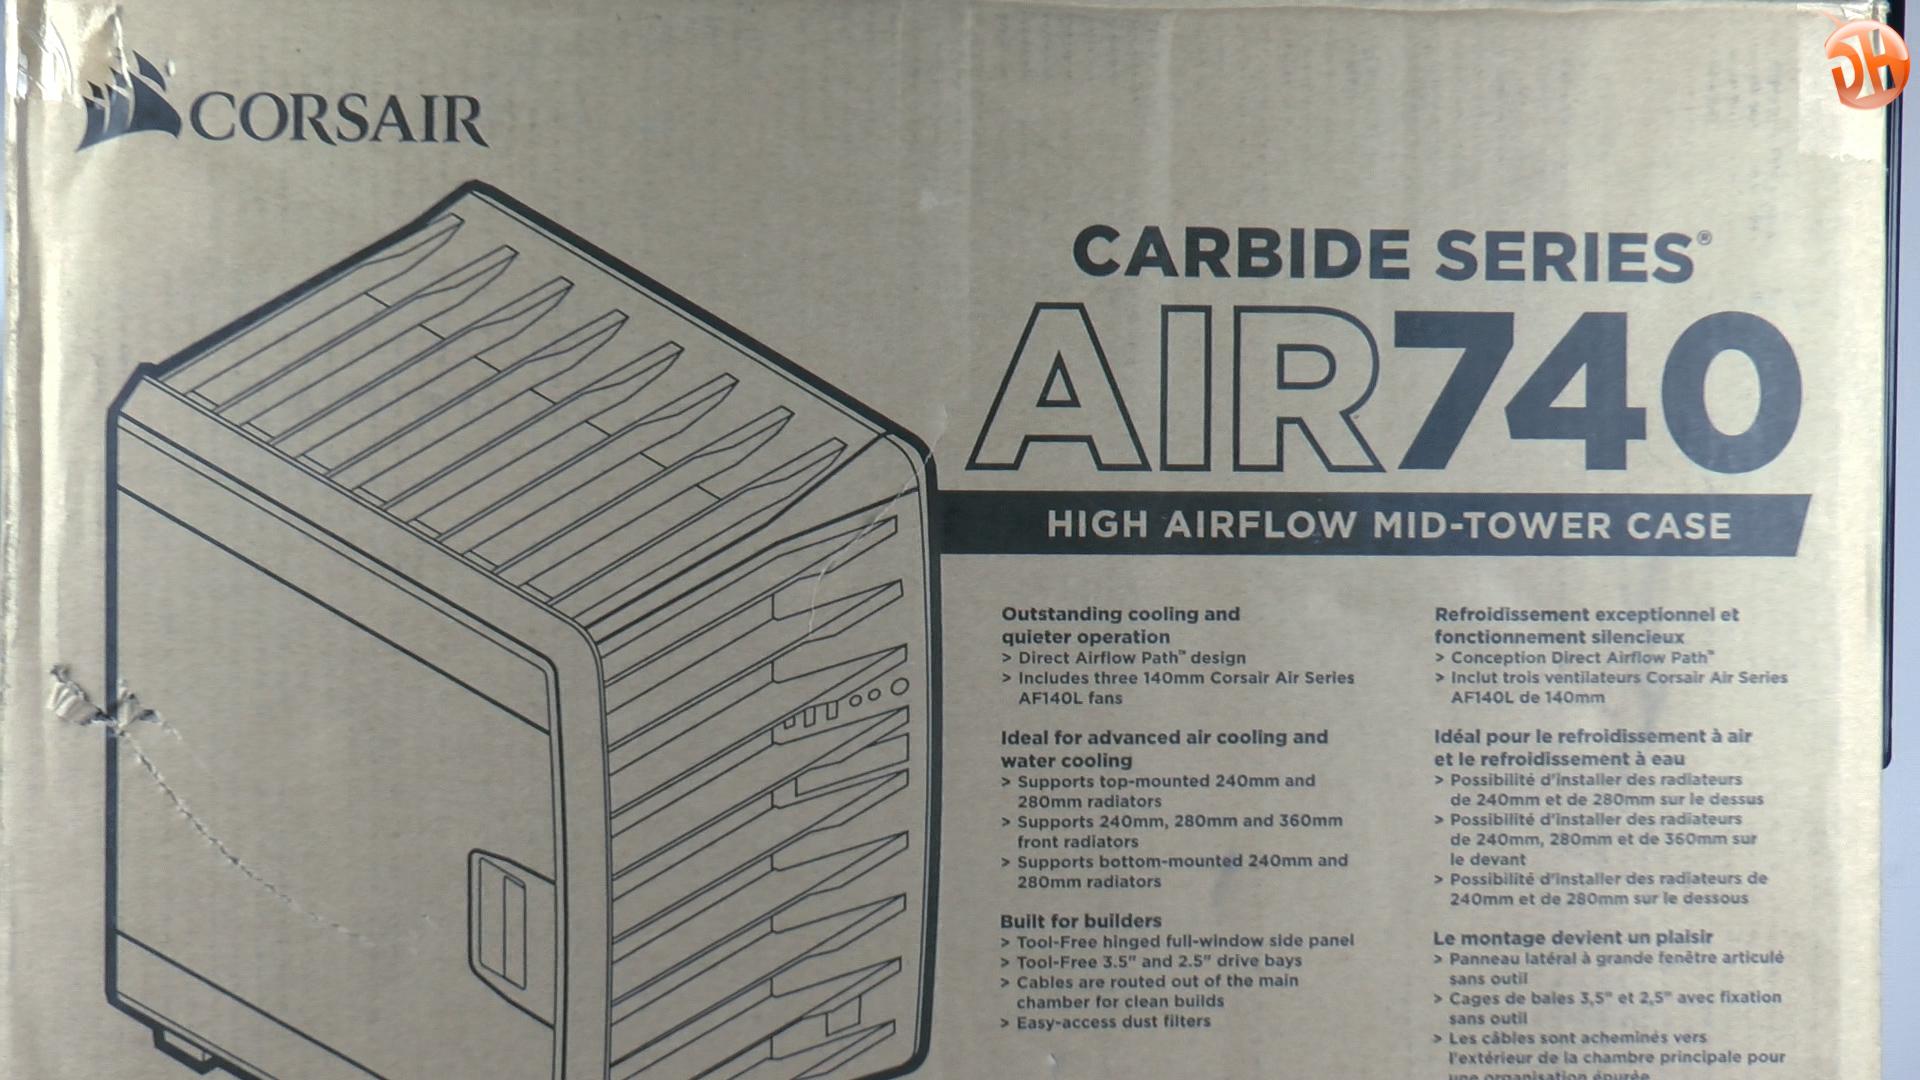 Corsair Air 740 incelemesi 'Geniş ve ferah ATX küp kasa'